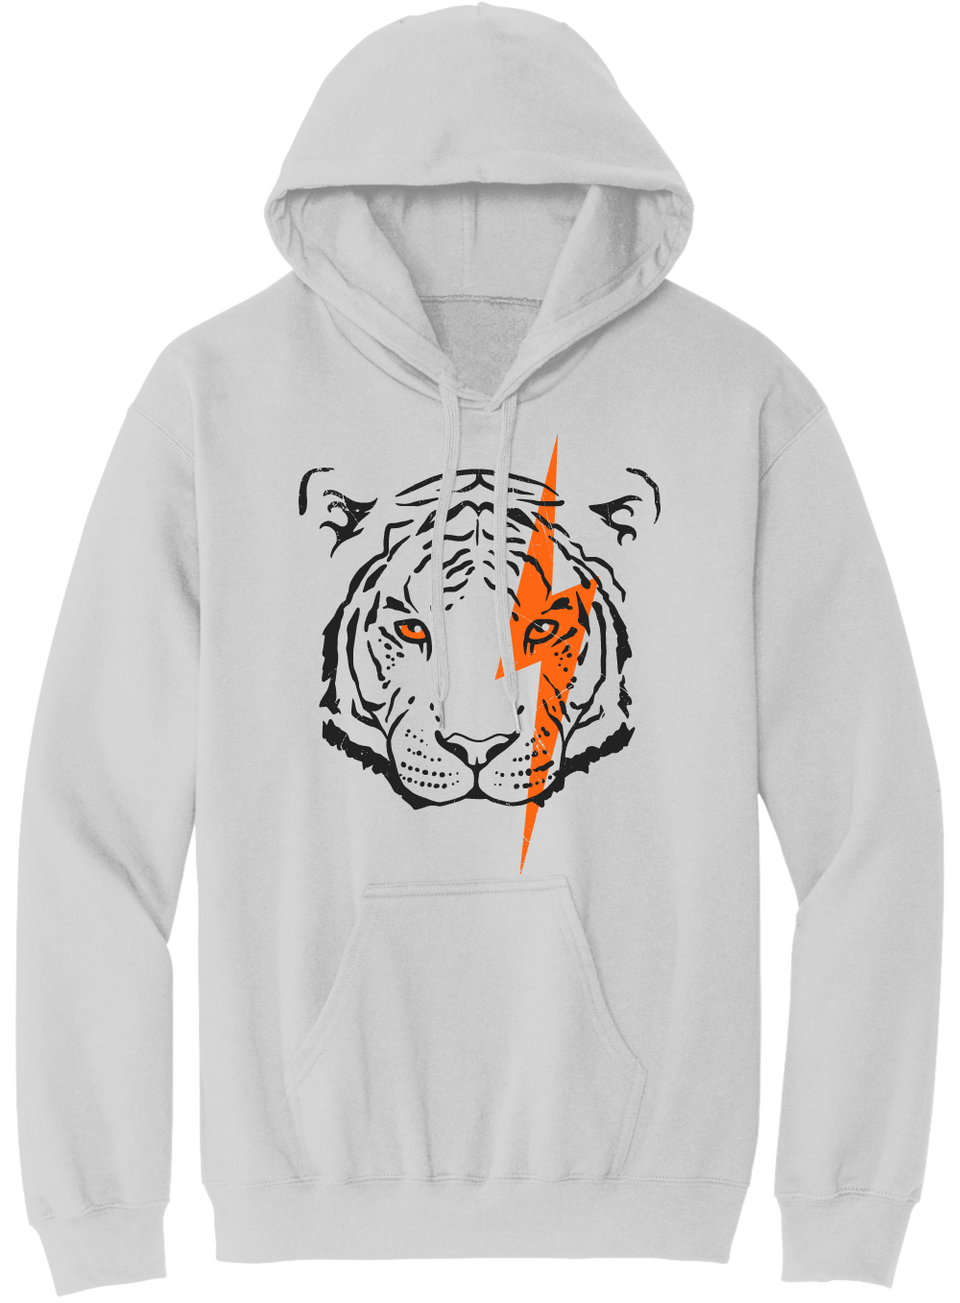 White Tiger Lightning Bolt Hooded Sweatshirt